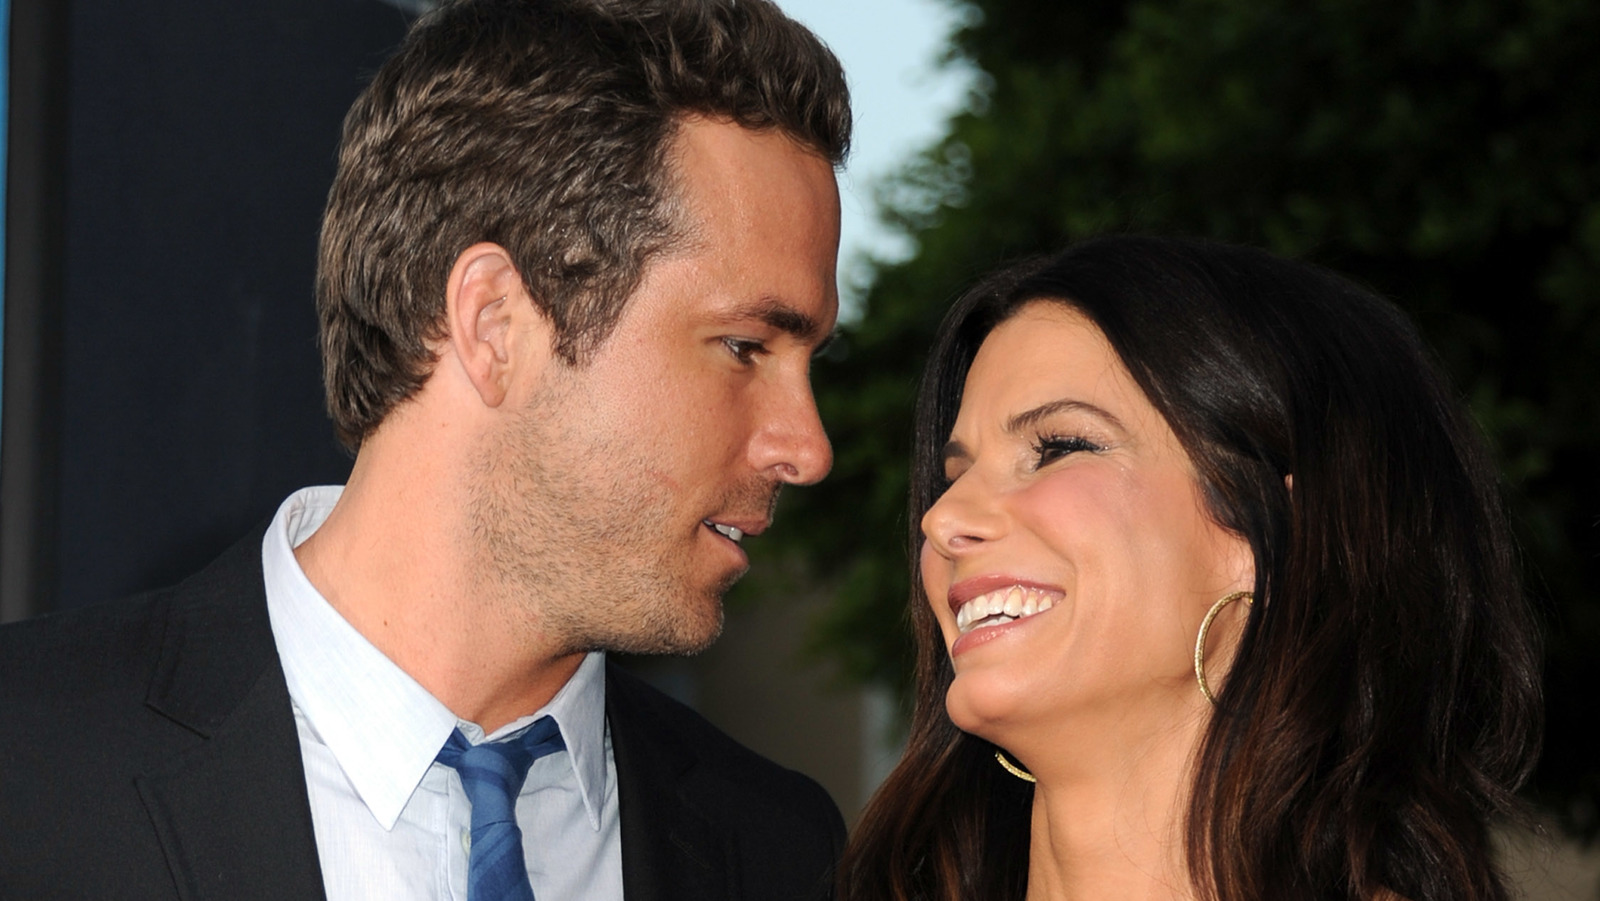 The Truth About Ryan Reynolds And Sandra Bullock's Romance